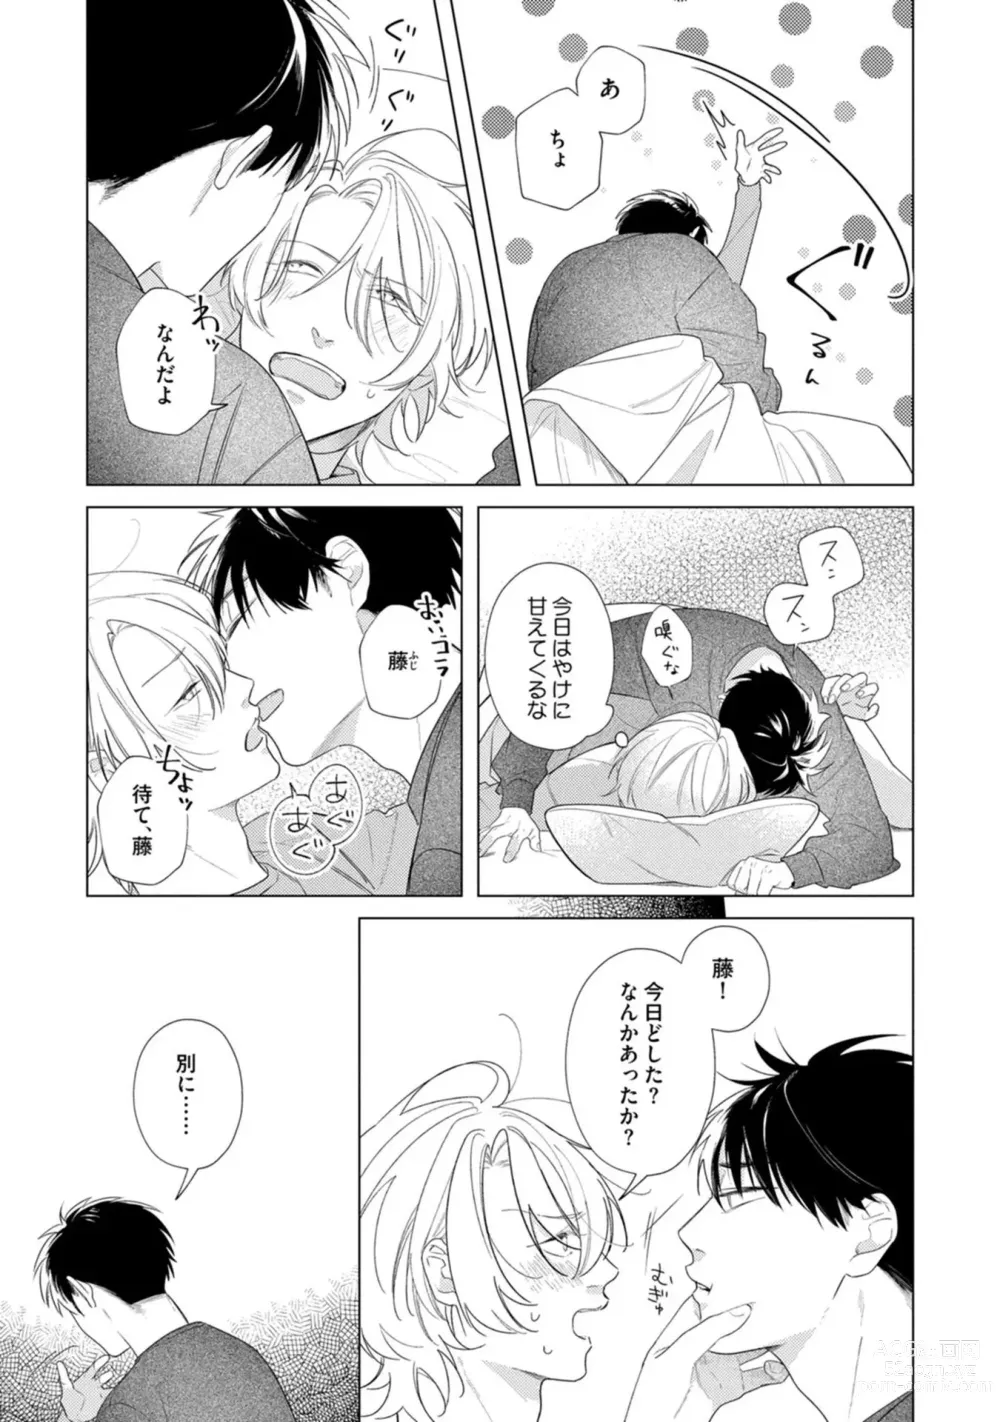 Page 11 of manga Yoru mo, Asa mo